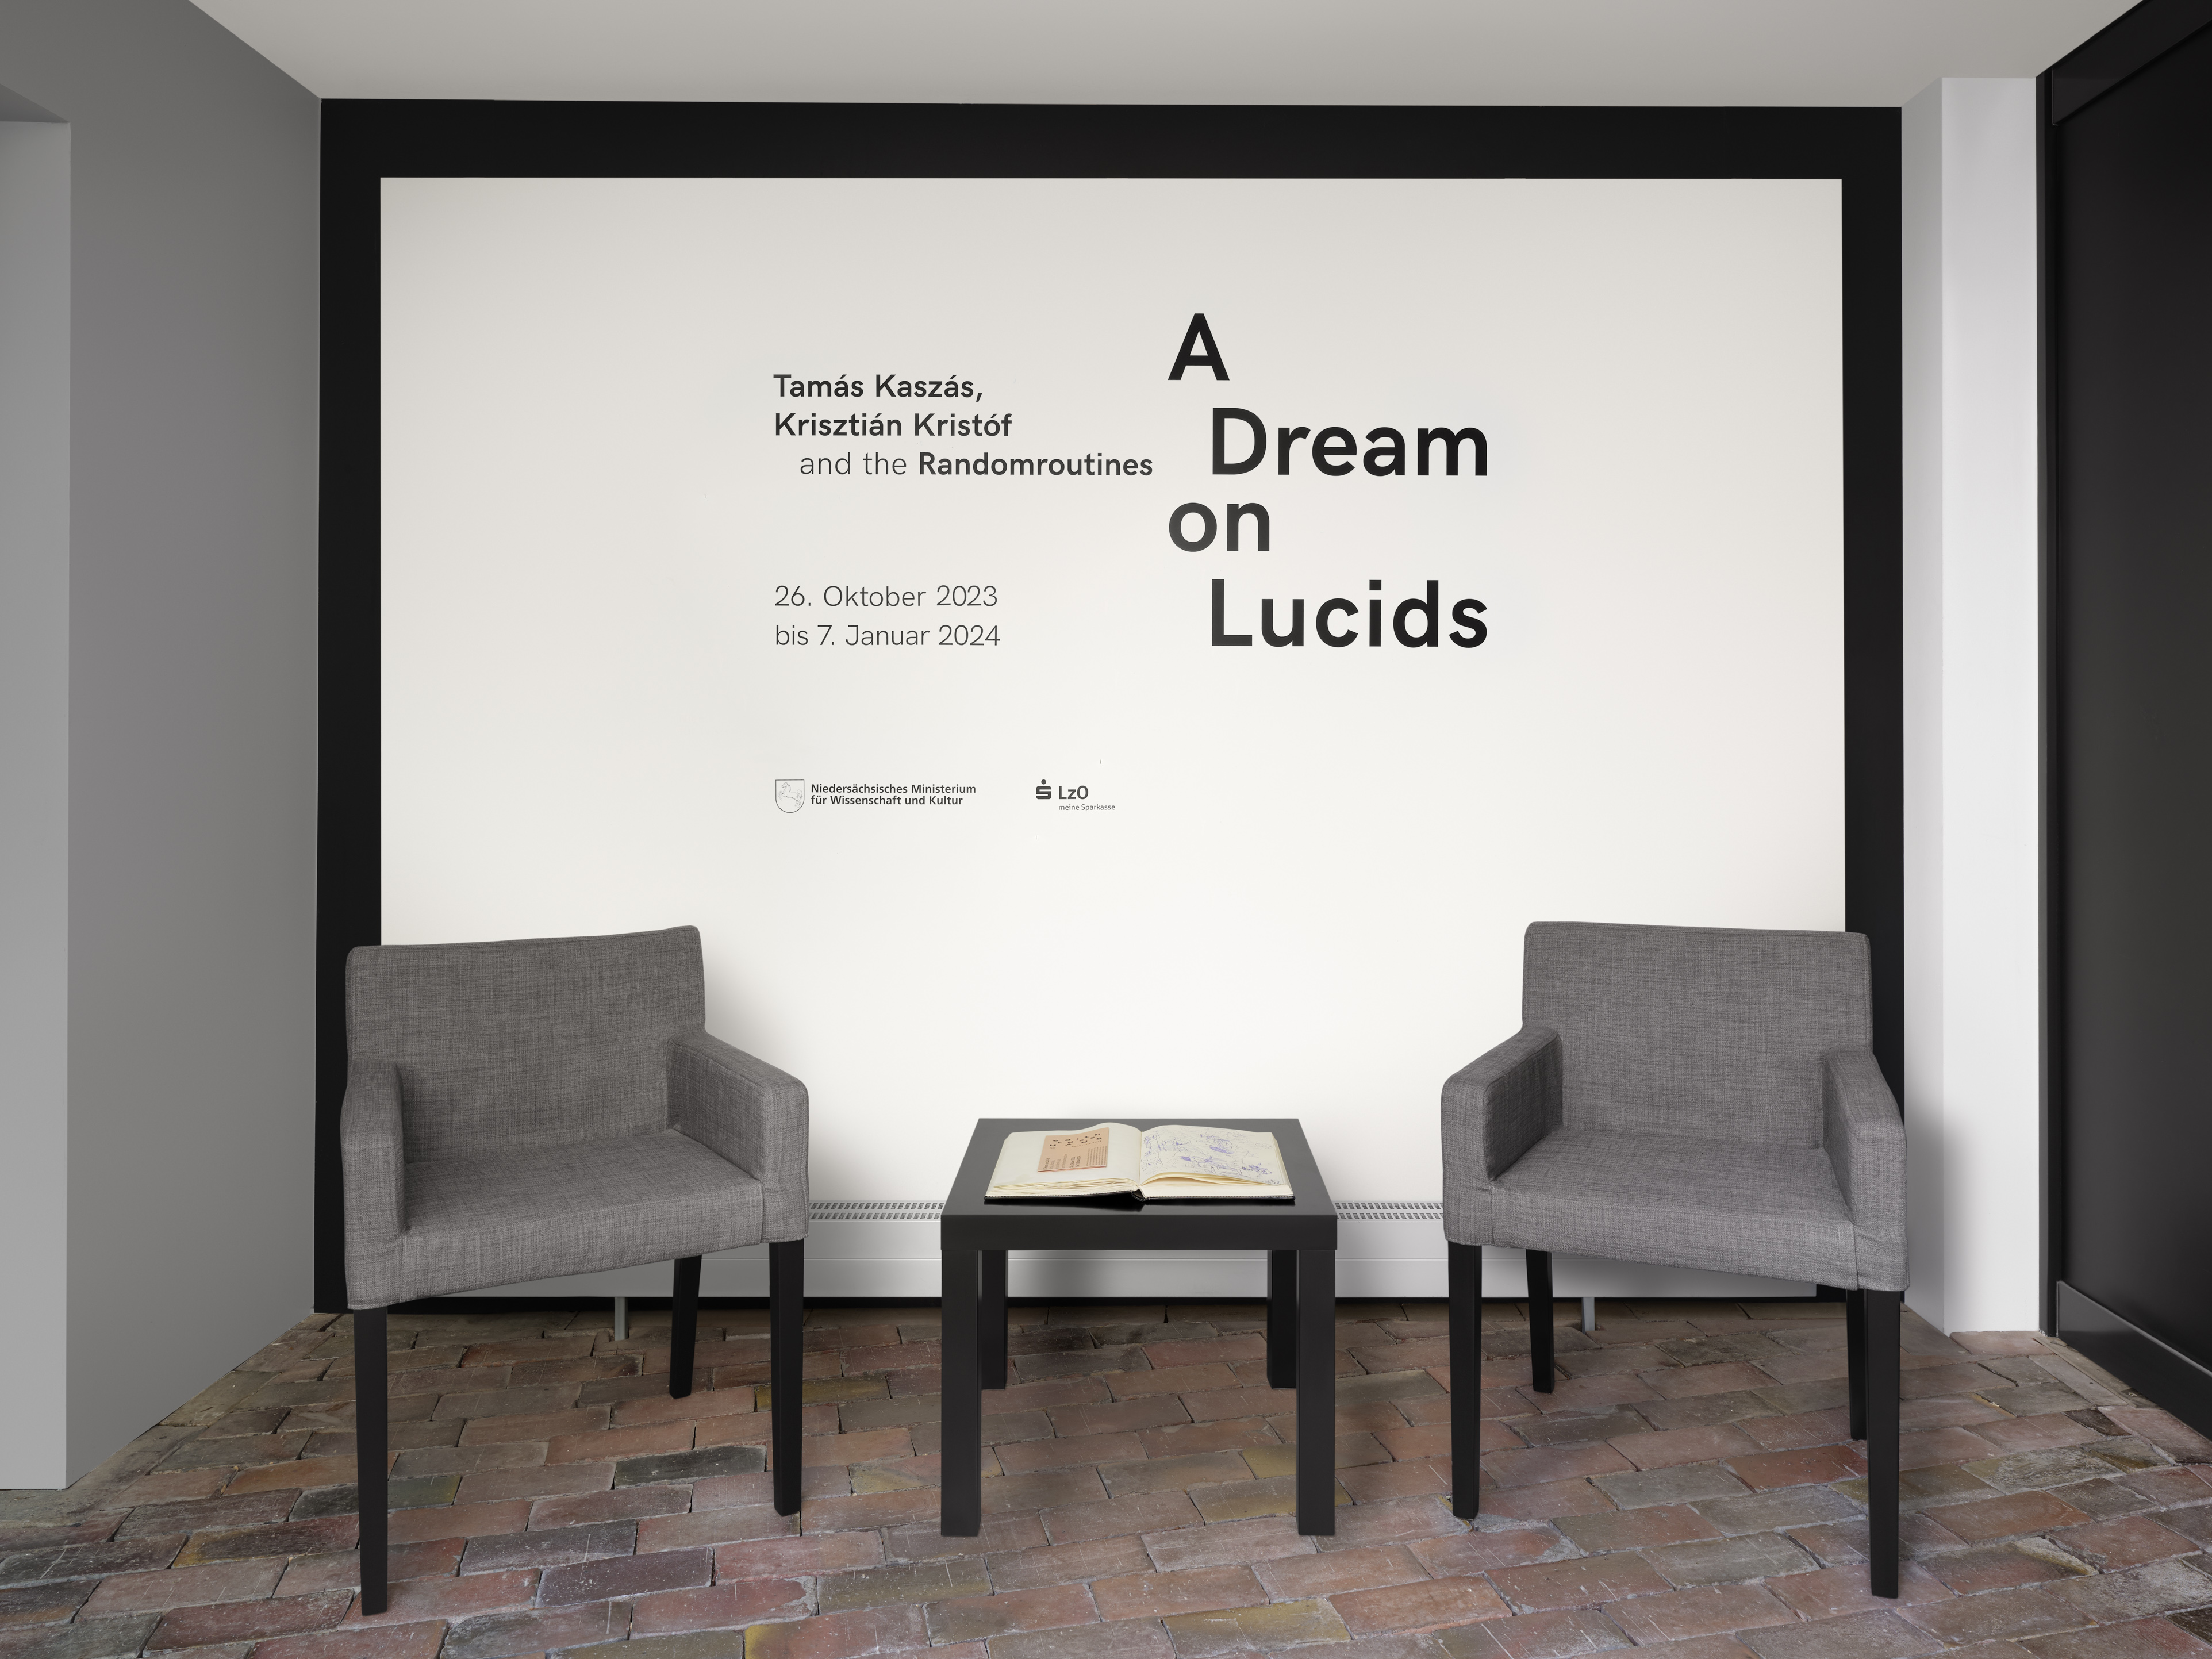 Tamás Kaszás, Krisztián Kristóf & The Randomroutines: A Dream on Lucids. Photo © Edith-Russ-Haus 2023